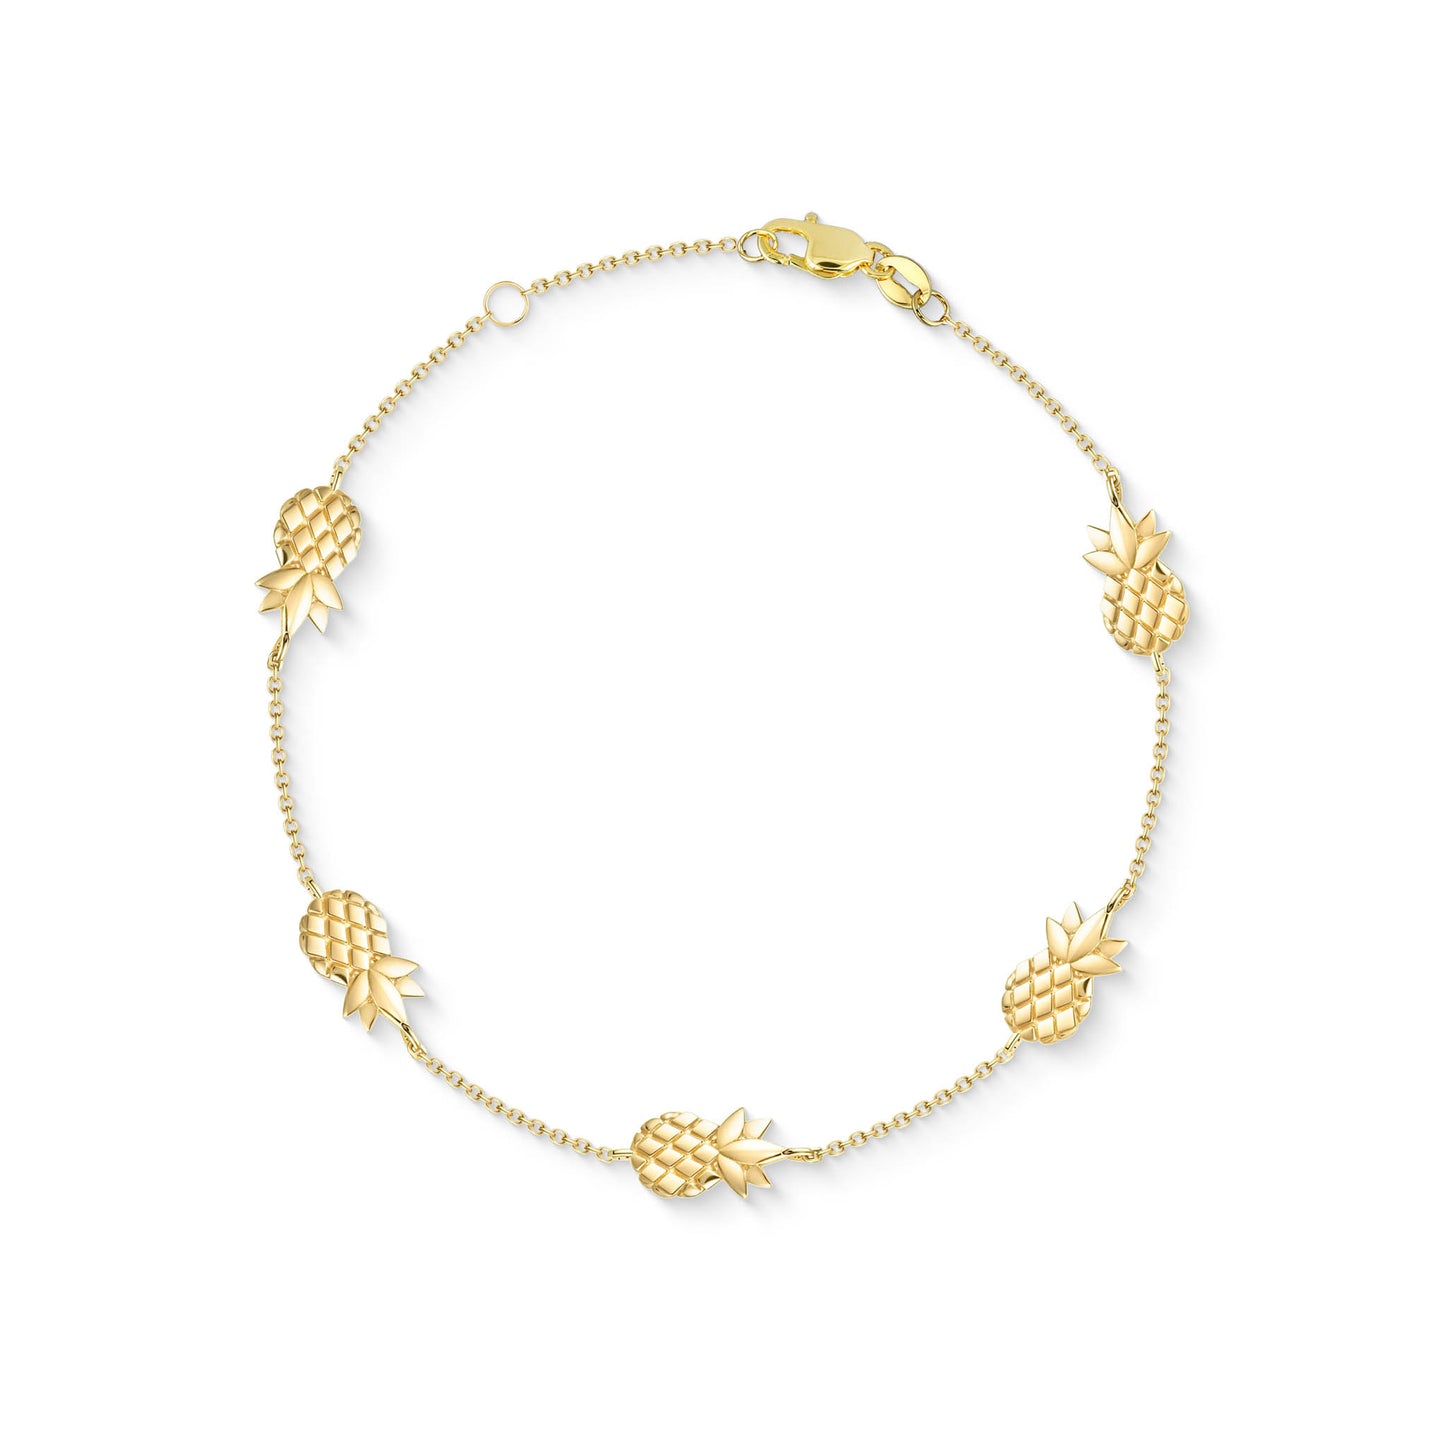 43793 - 14K Yellow Gold - Pineapple Adjustable Bracelet